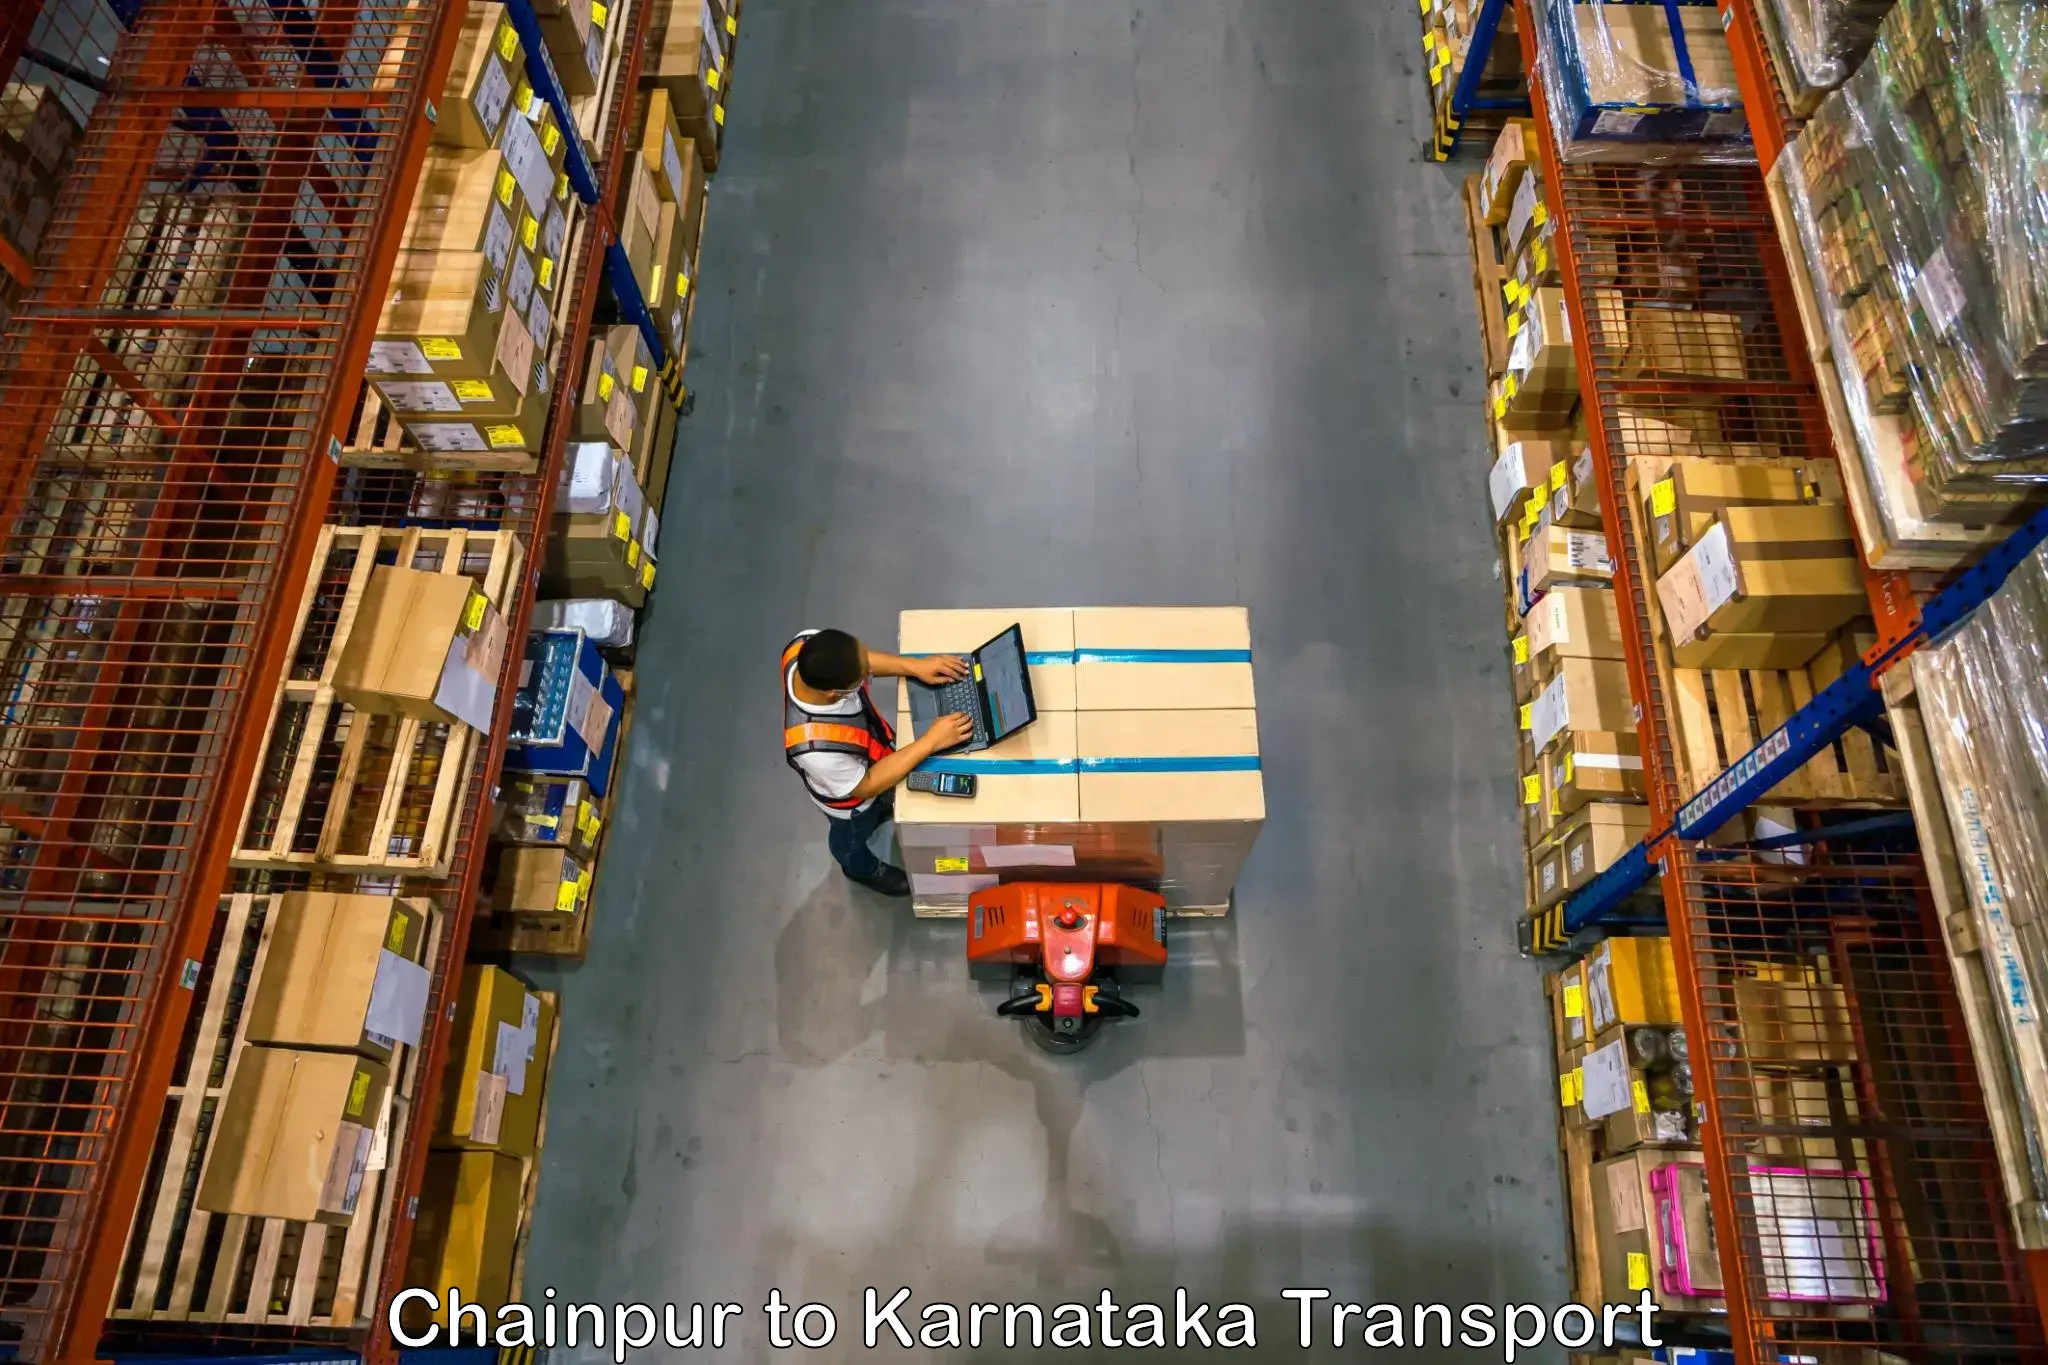 Truck transport companies in India Chainpur to Hiriyur